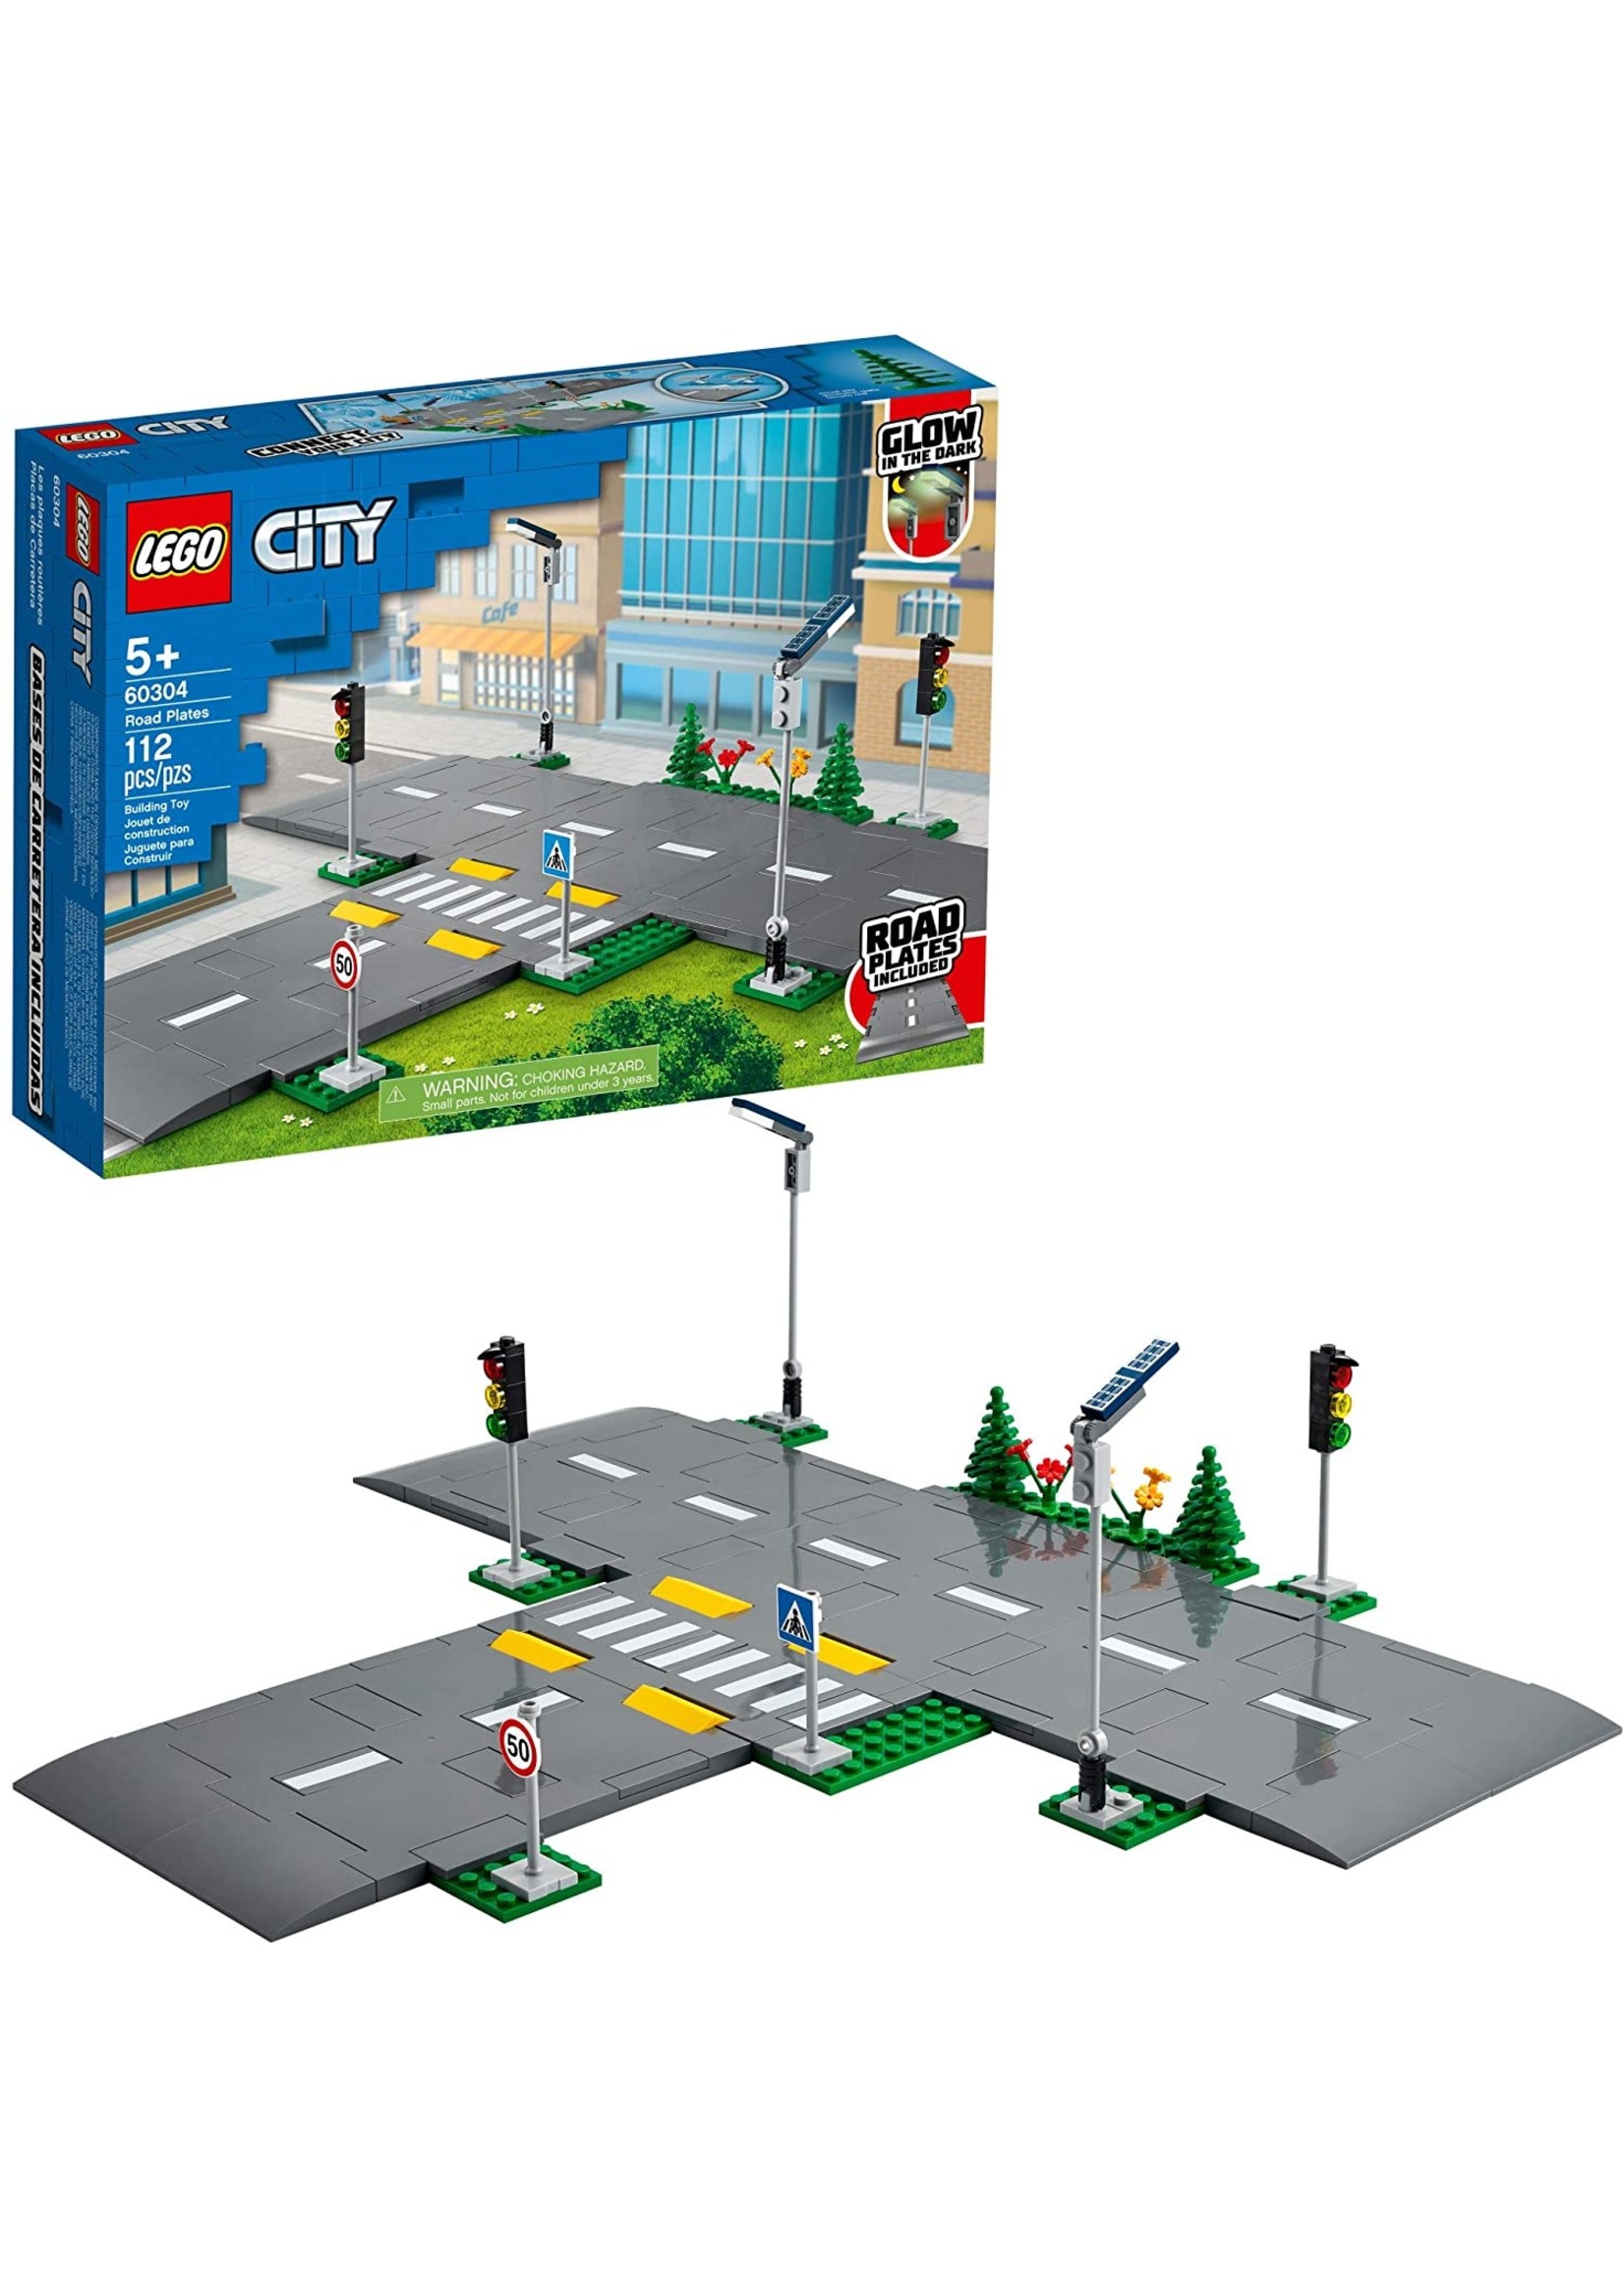 LEGO 60304 - Road Plates